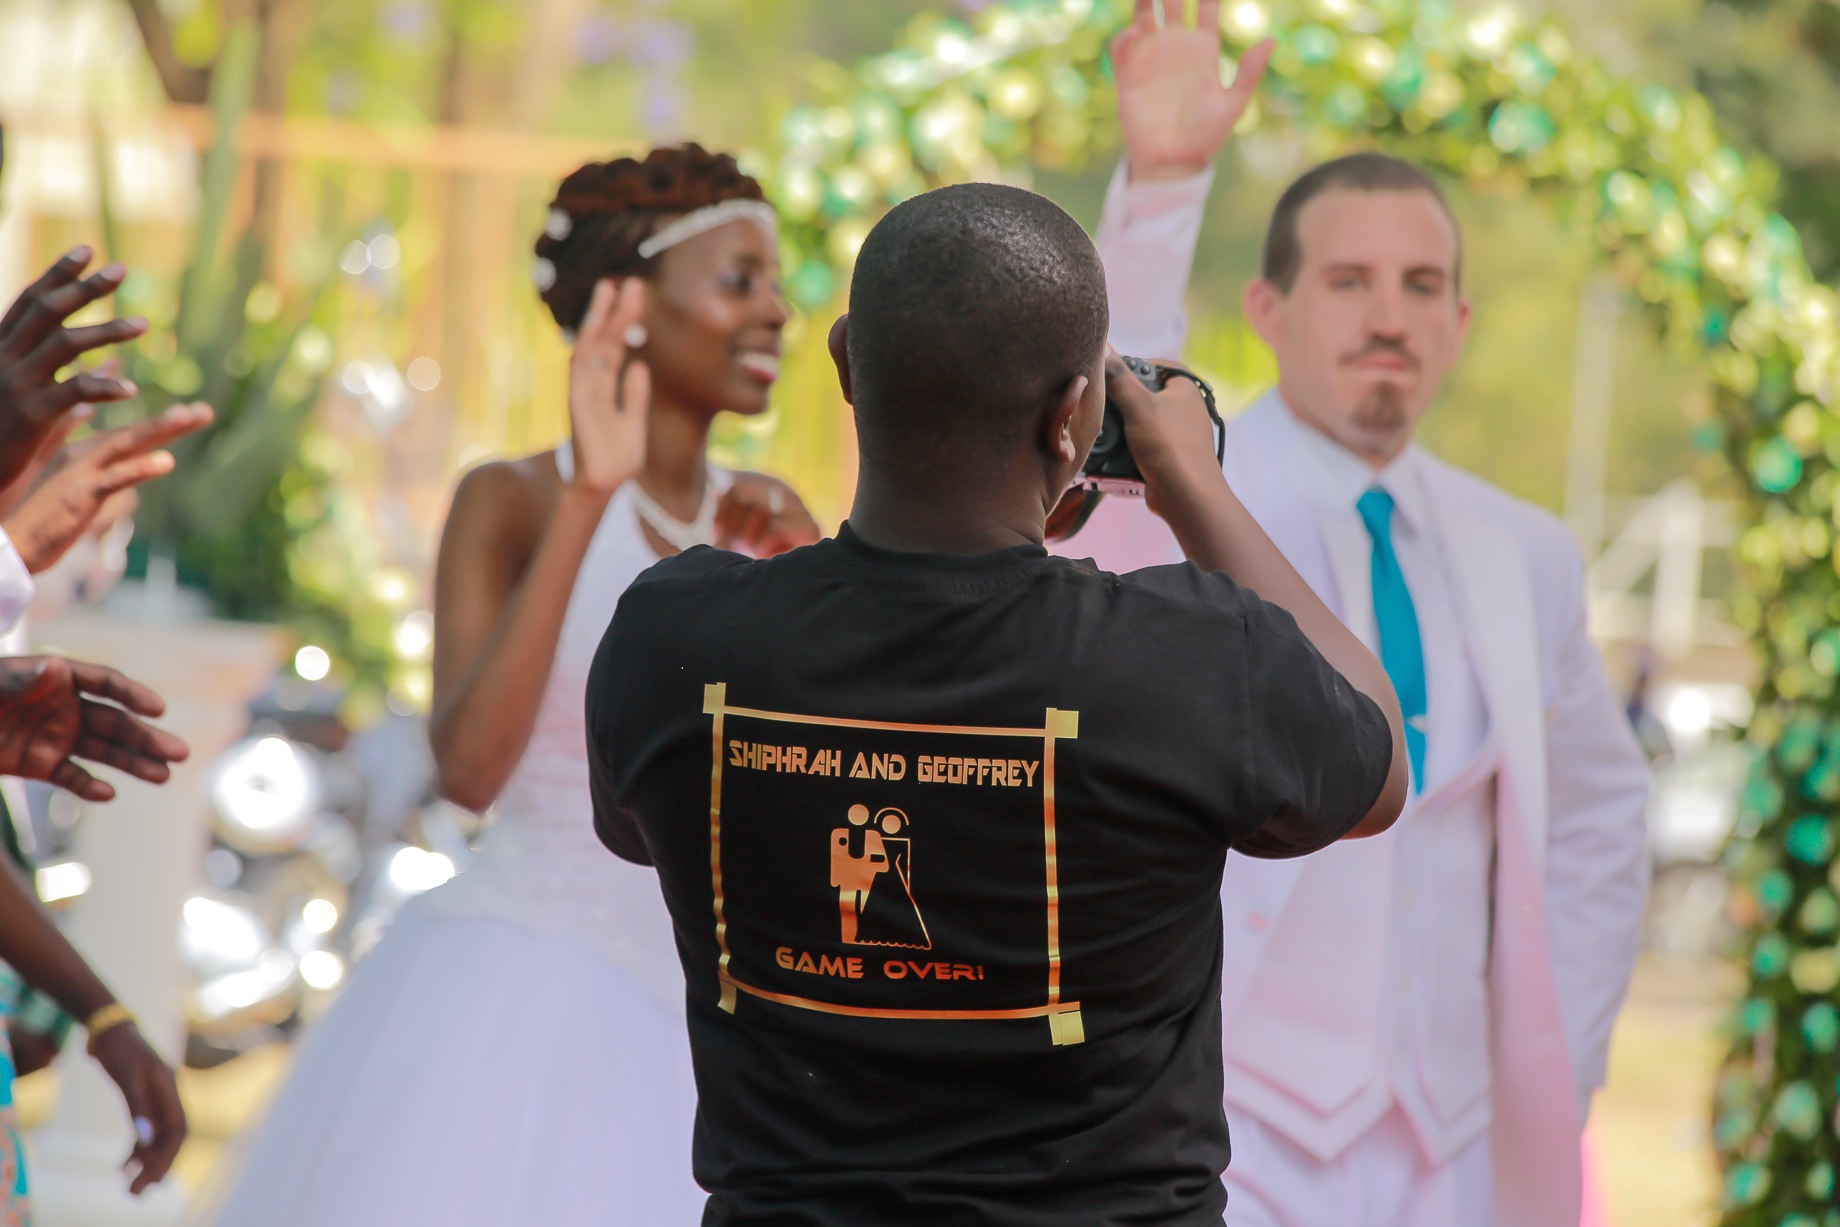 Best wedding photographer in Nairobi kenya